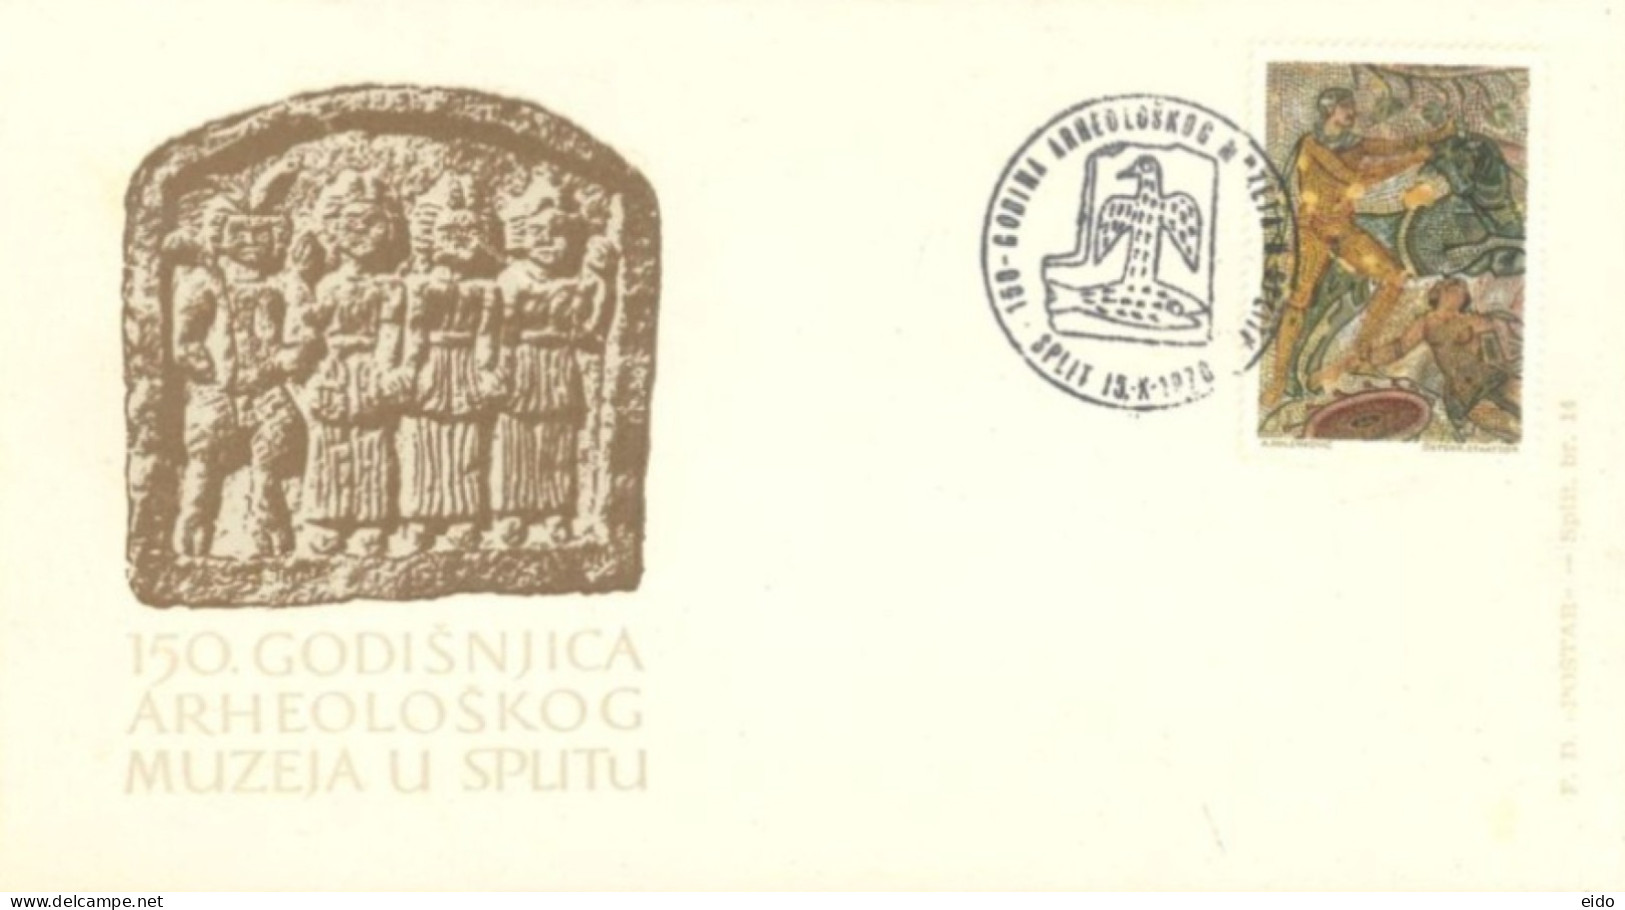 YUGOSLAVIA  - 1970, FDC STAMP OF150 GODINKA  ARCHAEOLOGICAL MUSEUM OF SPLIT WITH DESCRIPTION LEAFLET. - Storia Postale